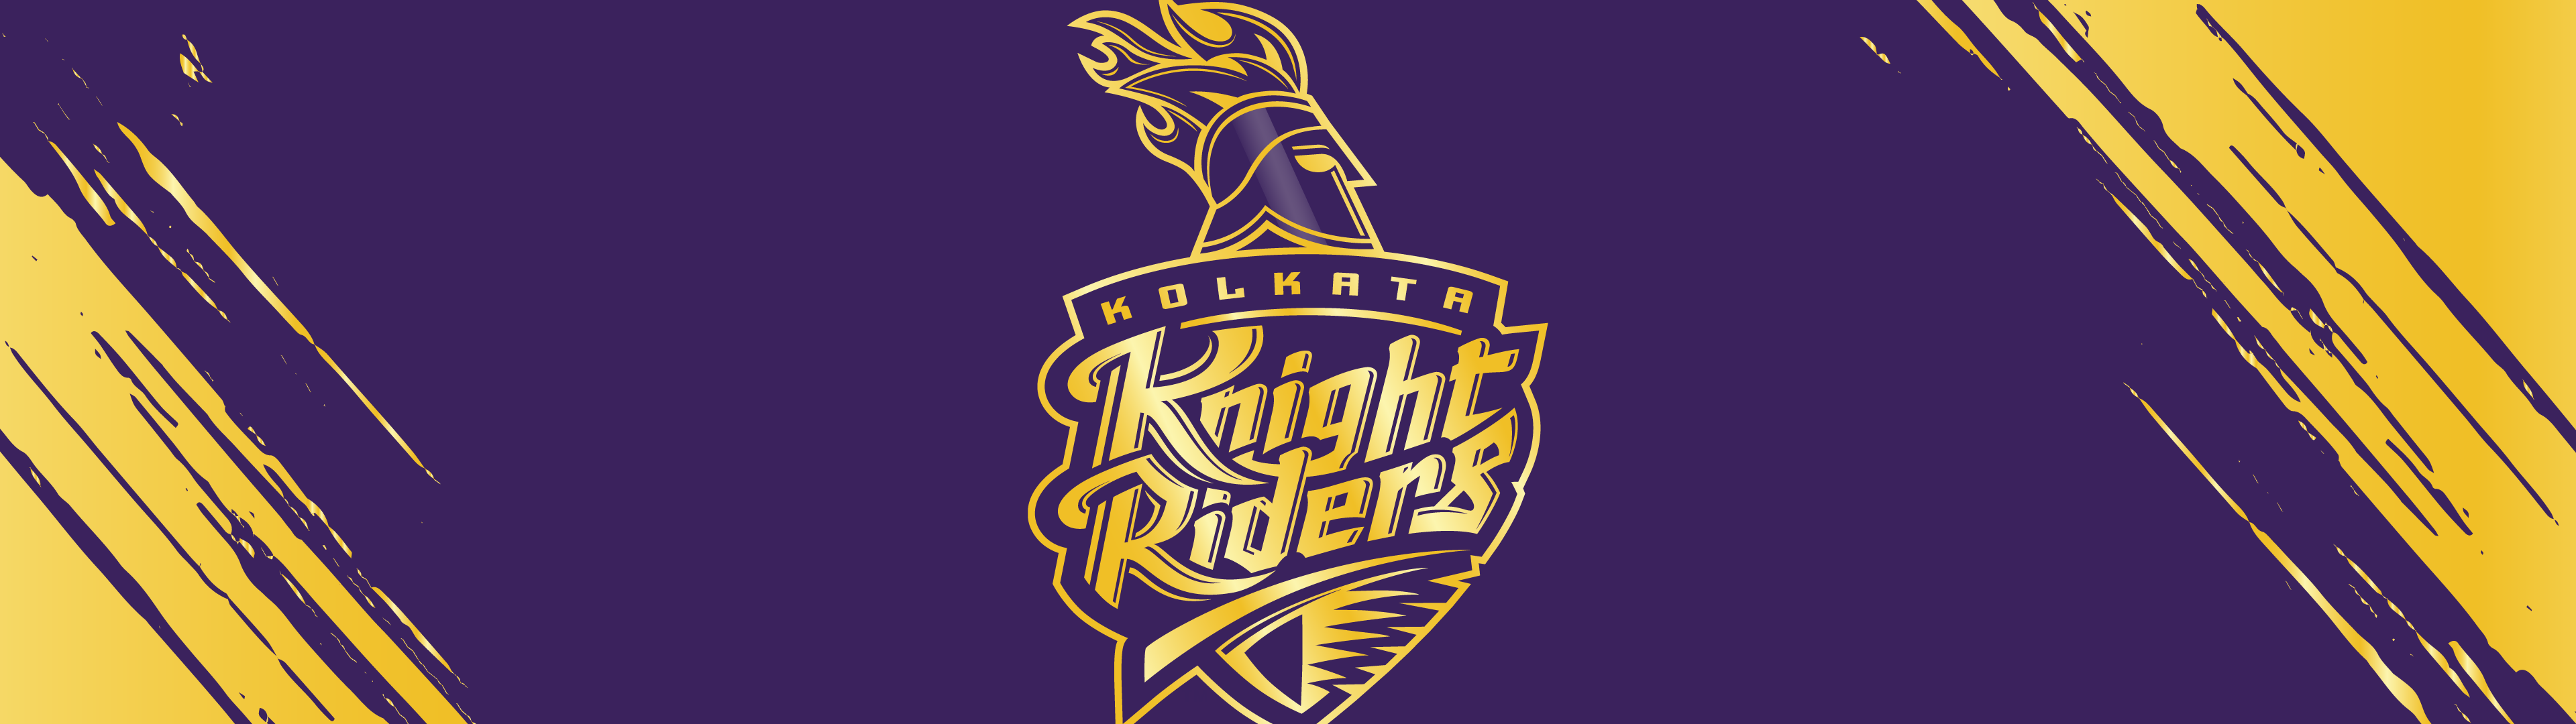 Ami KKR | Knight rider, Kolkata knight riders, History of cricket